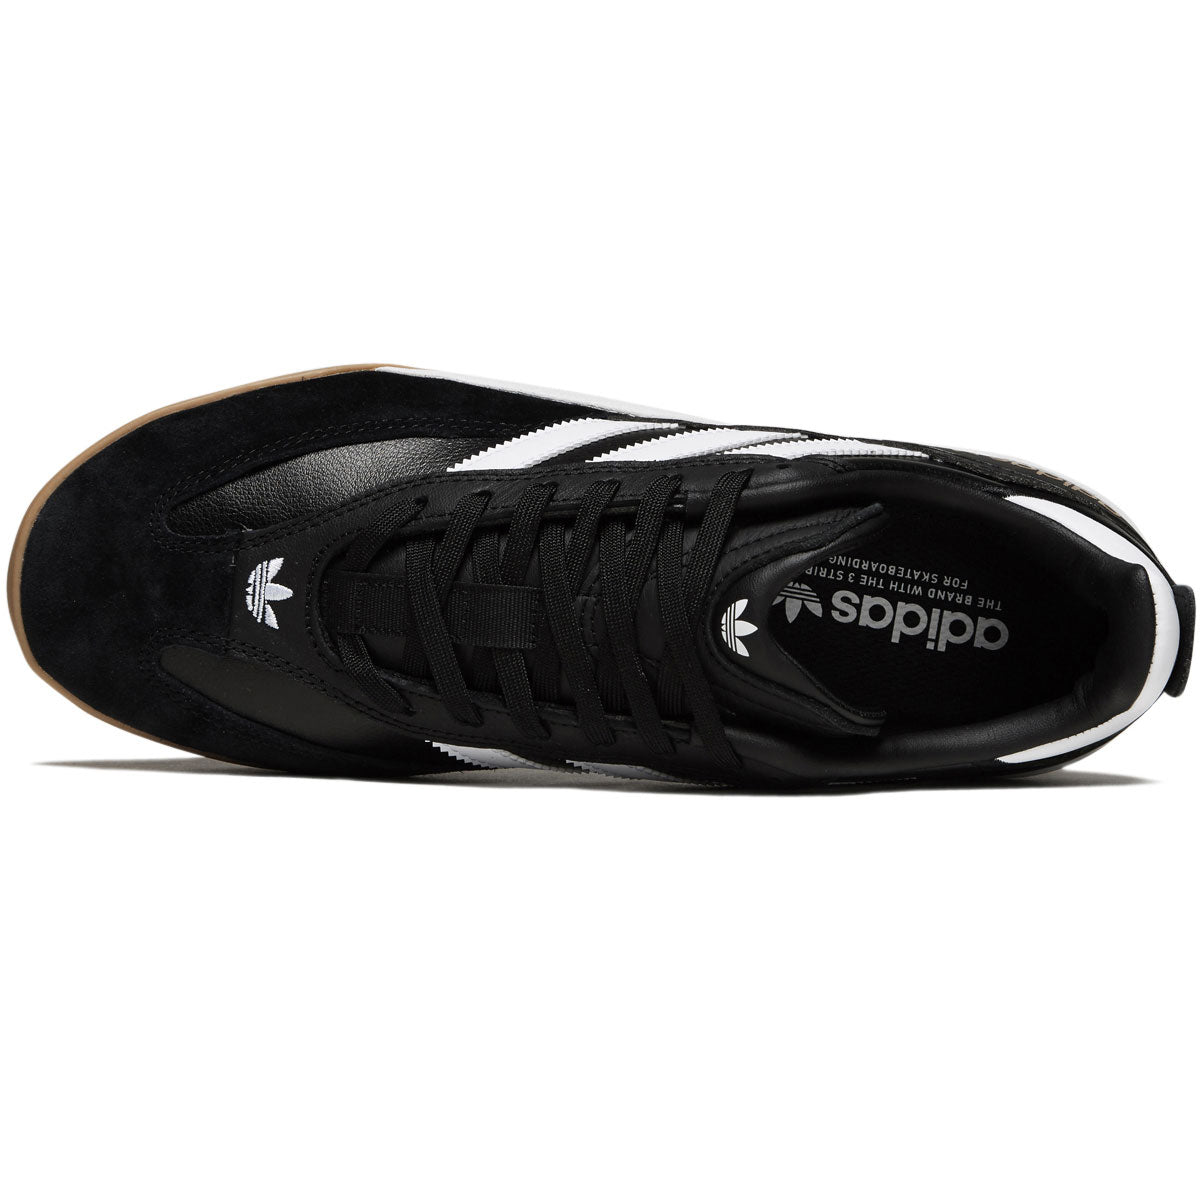 Adidas Copa Nationale Shoes - Black/White/Gold Metallic image 3